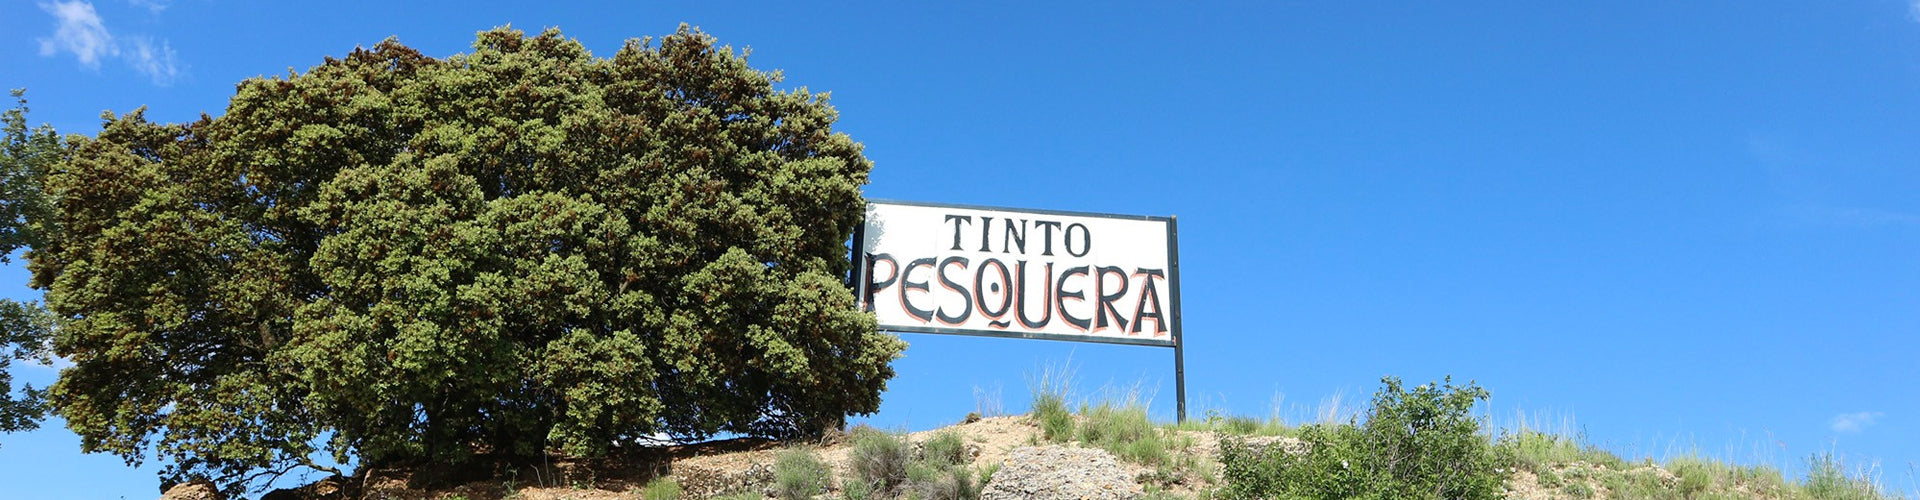 Tinto Pesquera Vineyard Marker Sign ontop a Hill